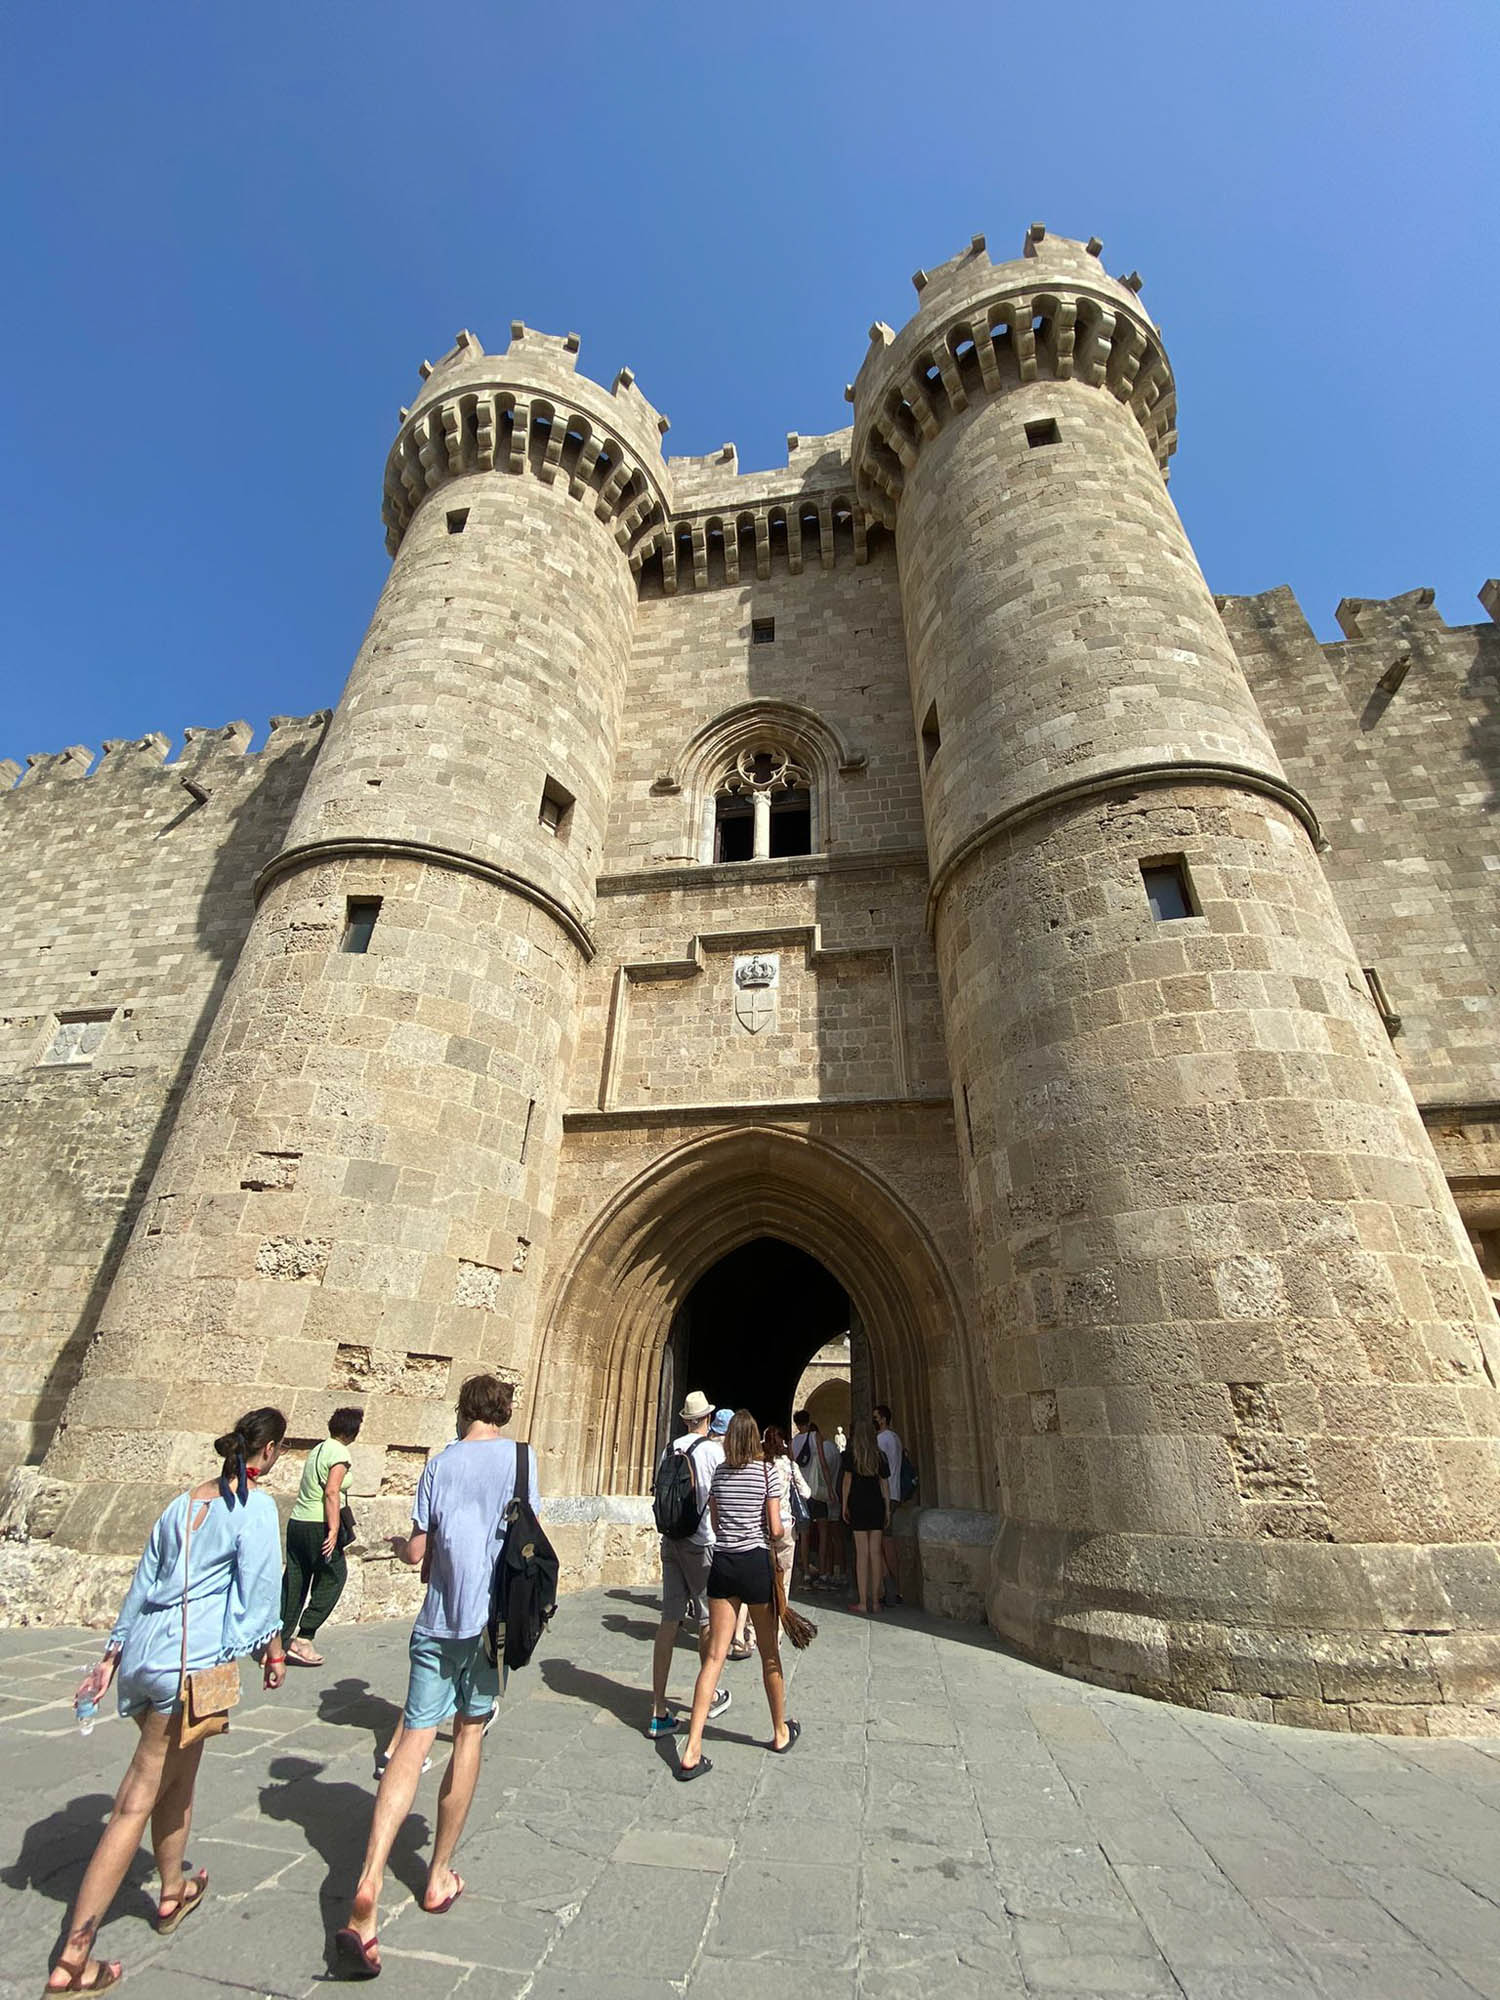 brama do miasta Rodos, fortyfikacje, mury